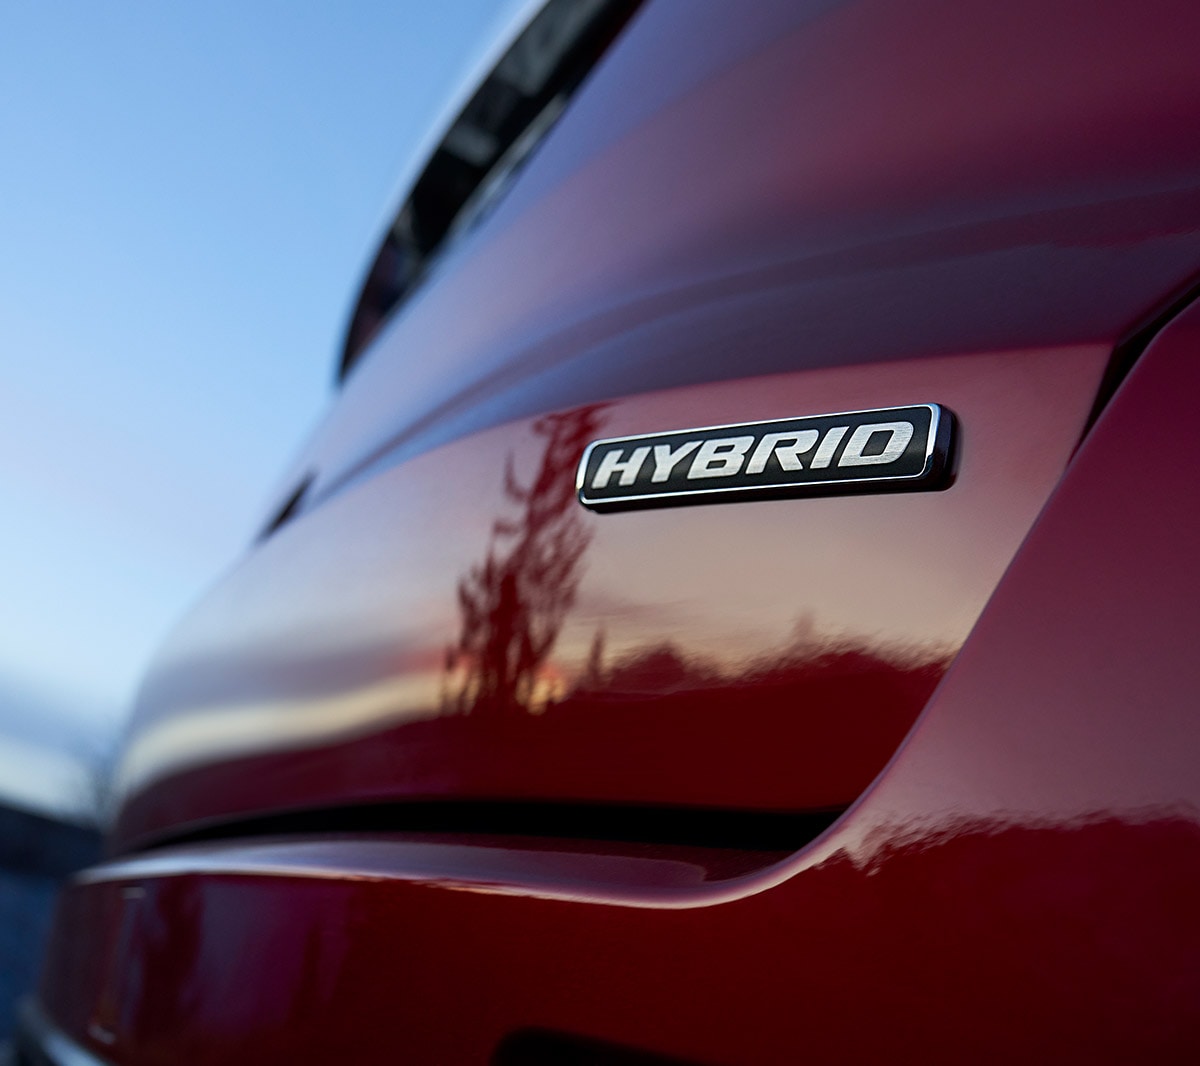 Ford S-MAX rear hybrid badge close up